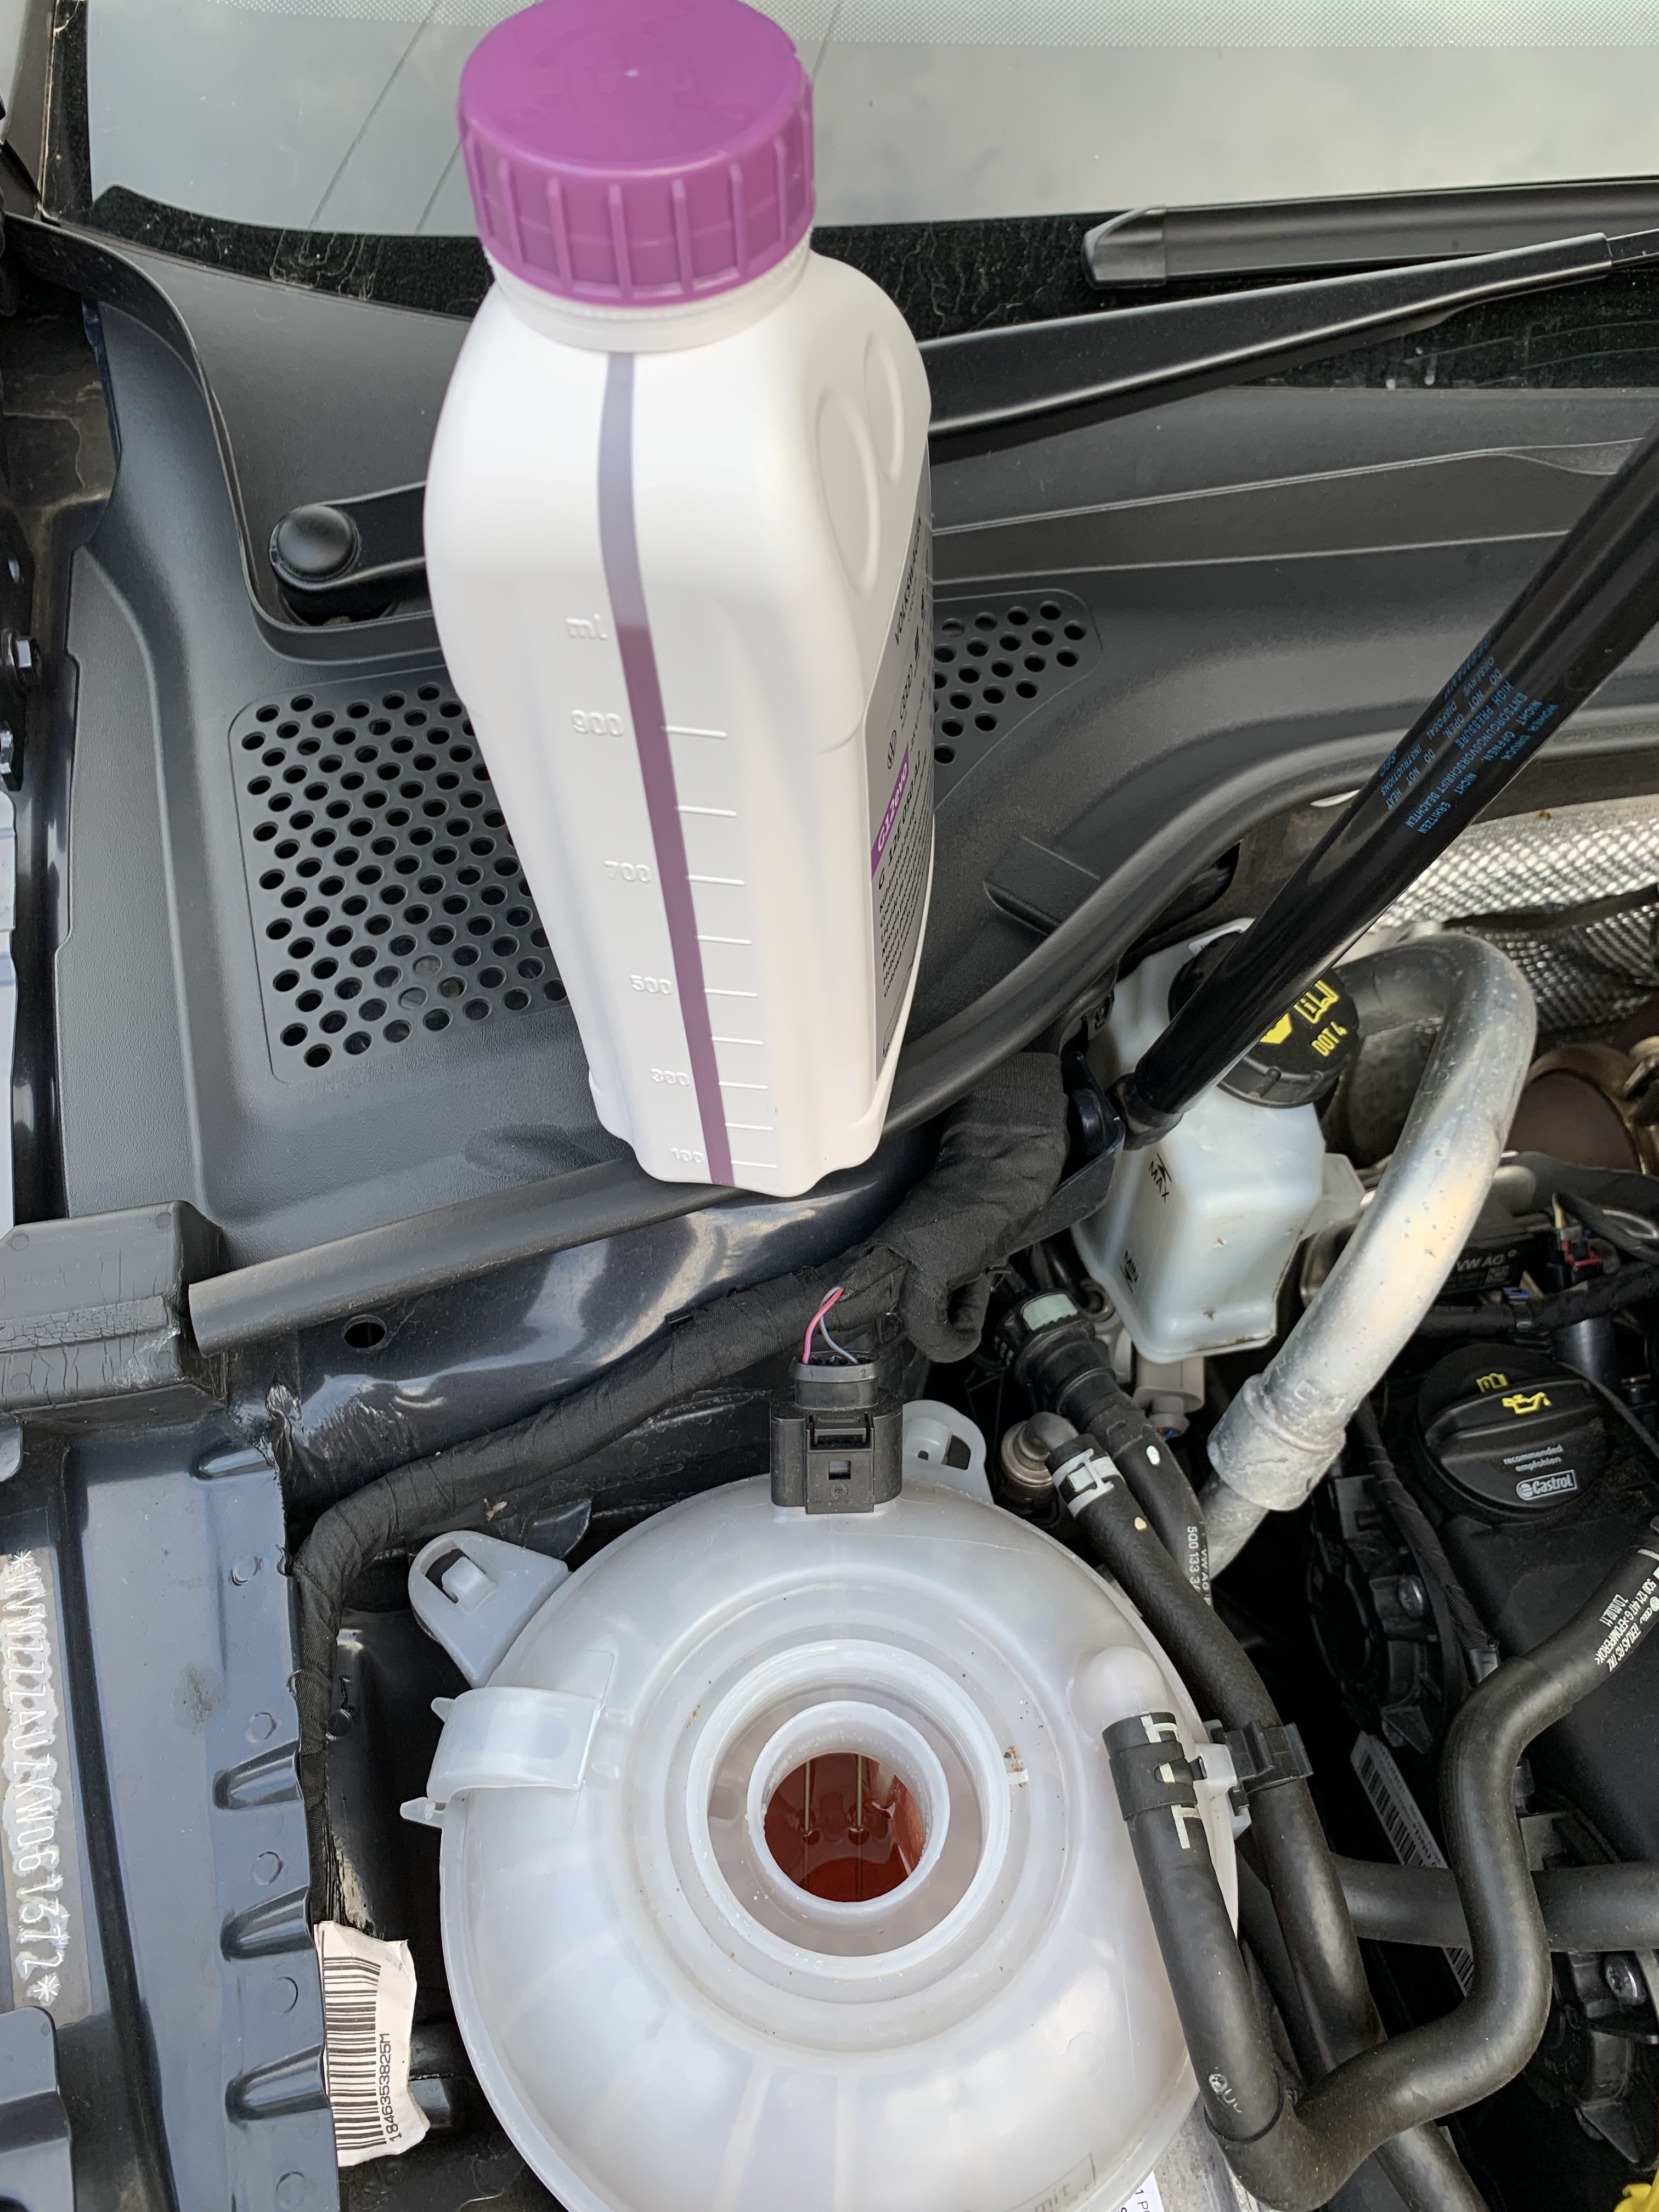 VW/Audi/Skoda/Seat G12 Evo Pre-mixed Coolant (Replace G13) 1 Litre